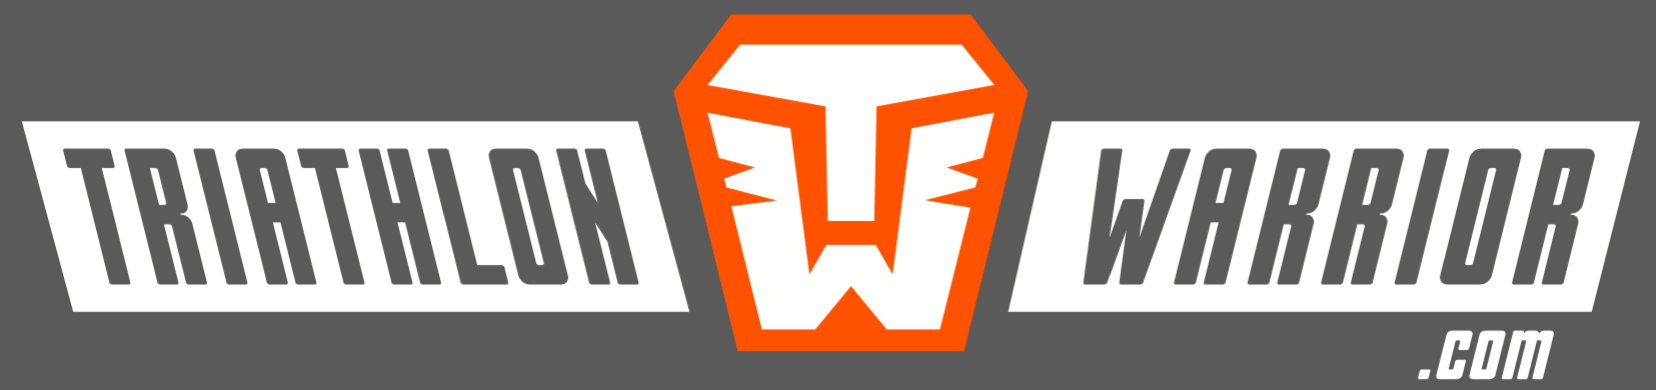 triathlonwarrior Logo